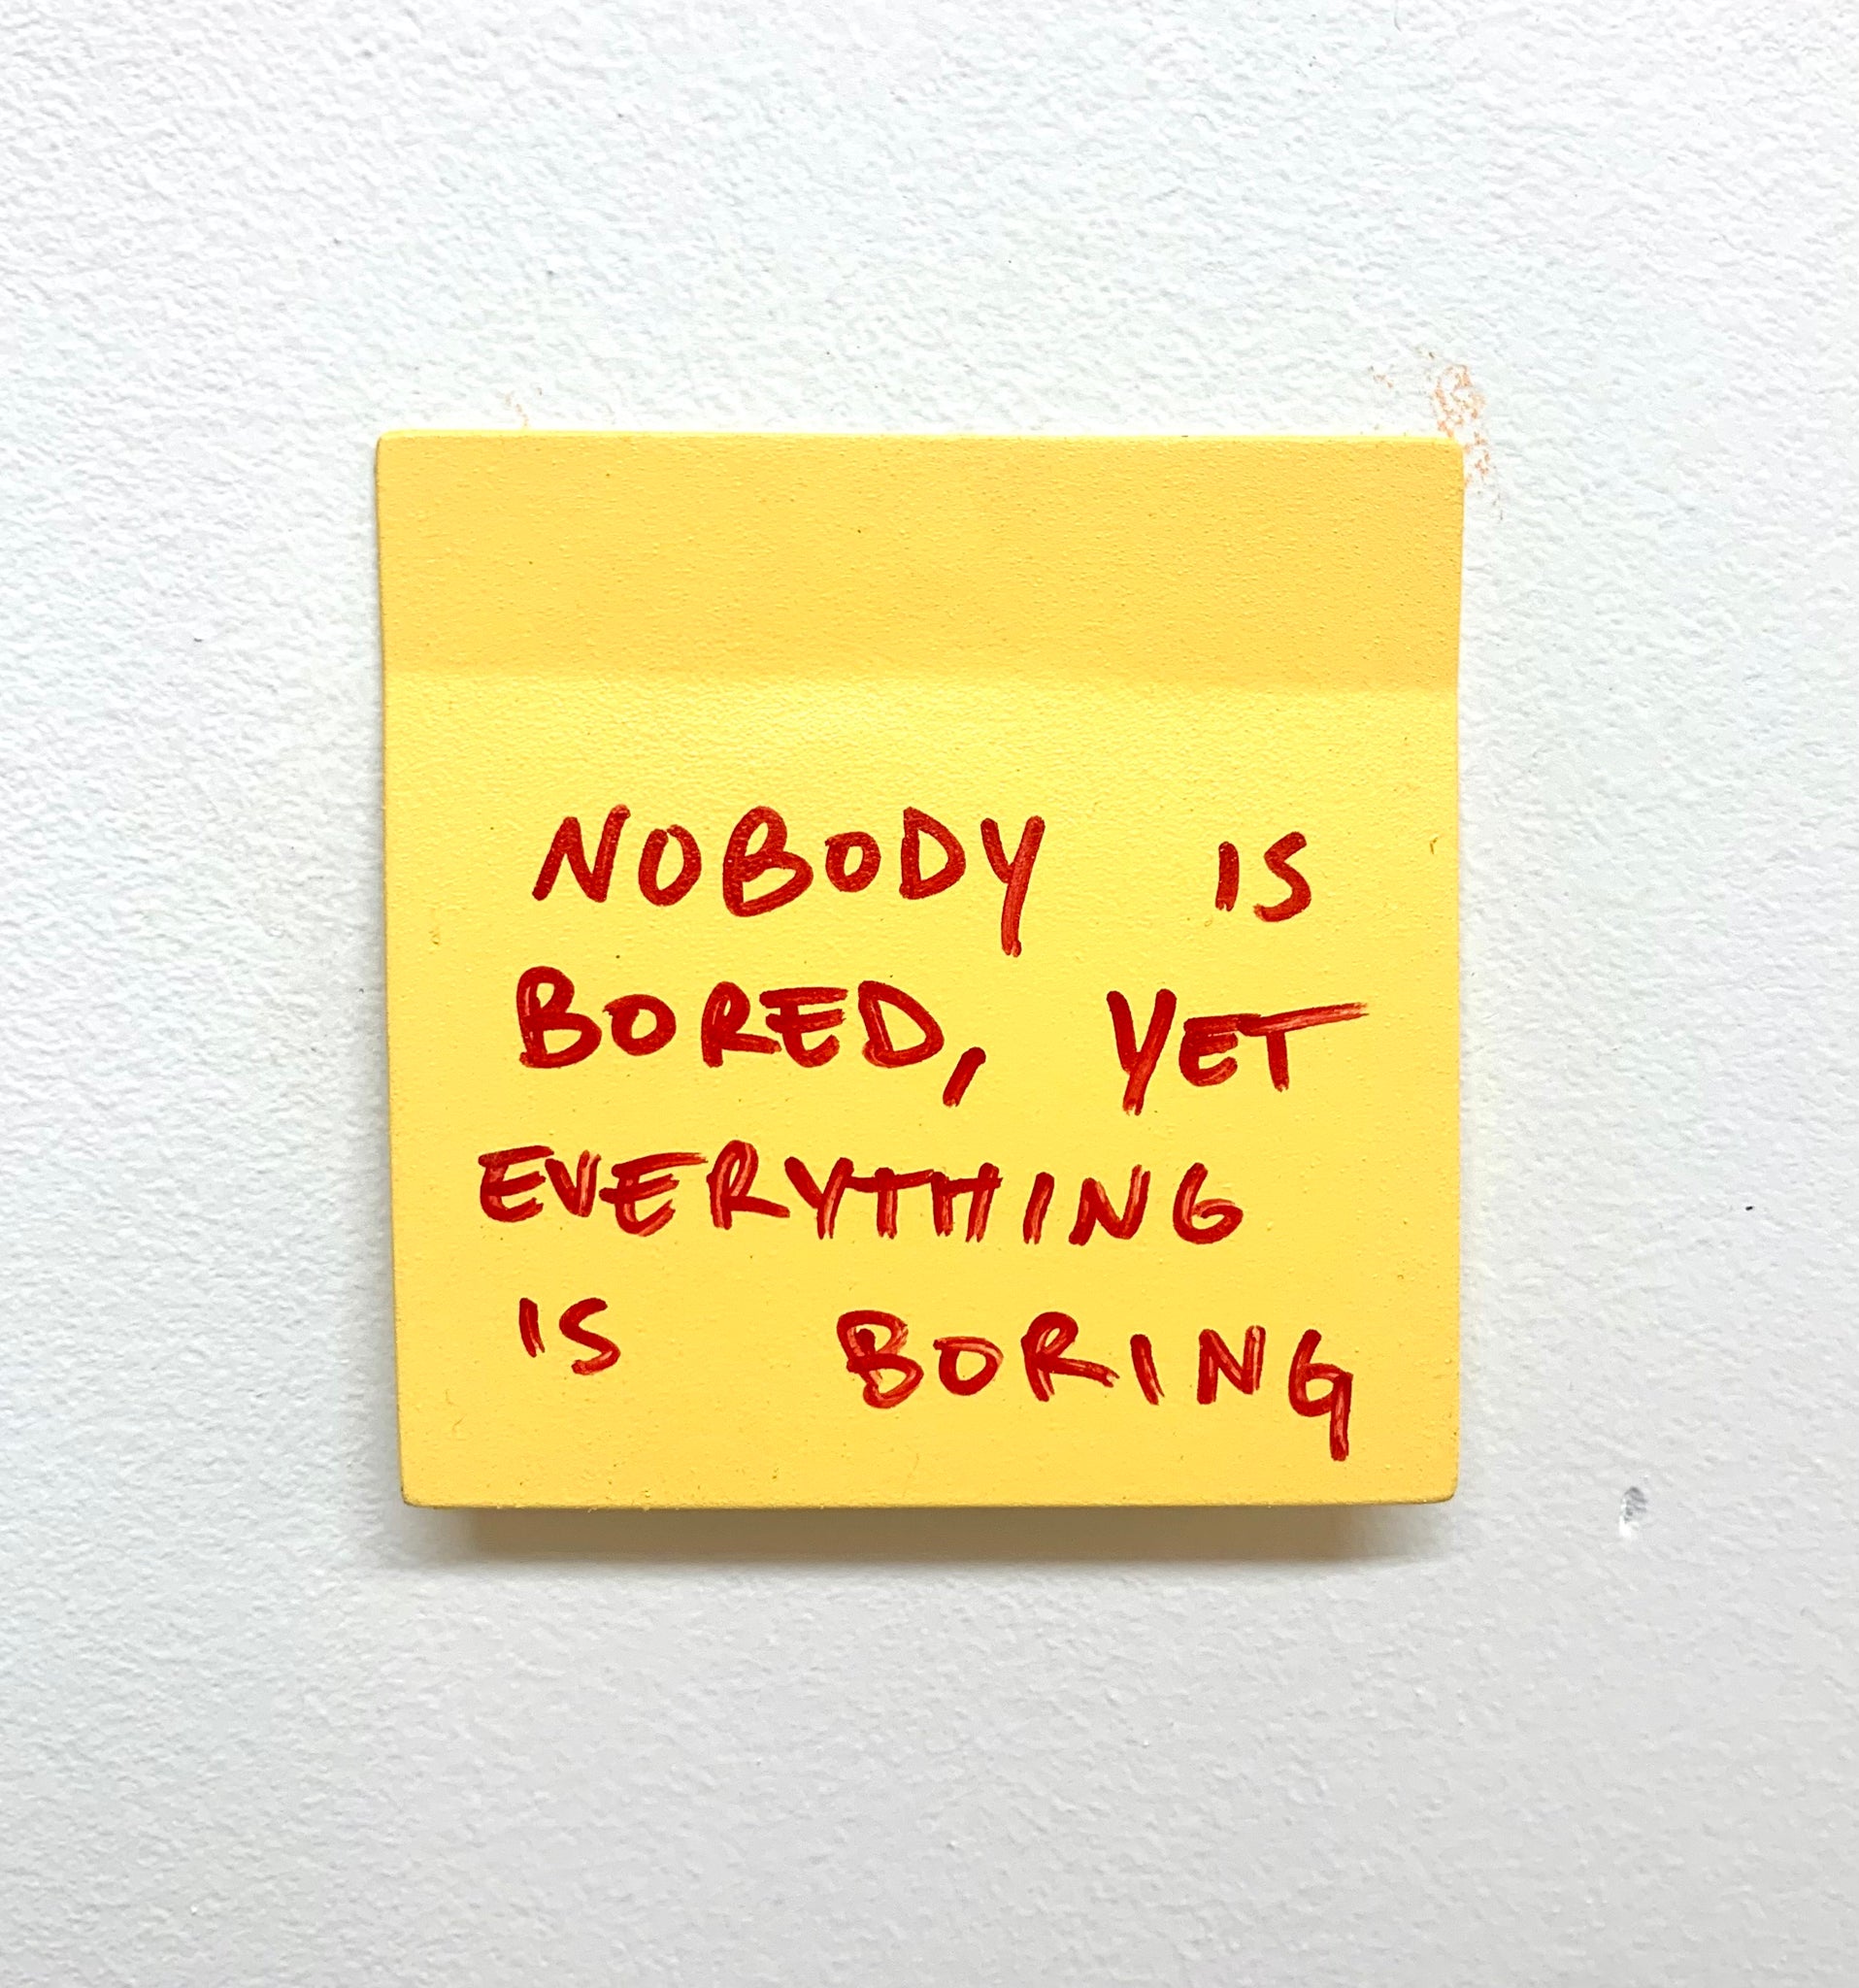 Stuart Lantry, "Nobody is bored, yet everything is boring"